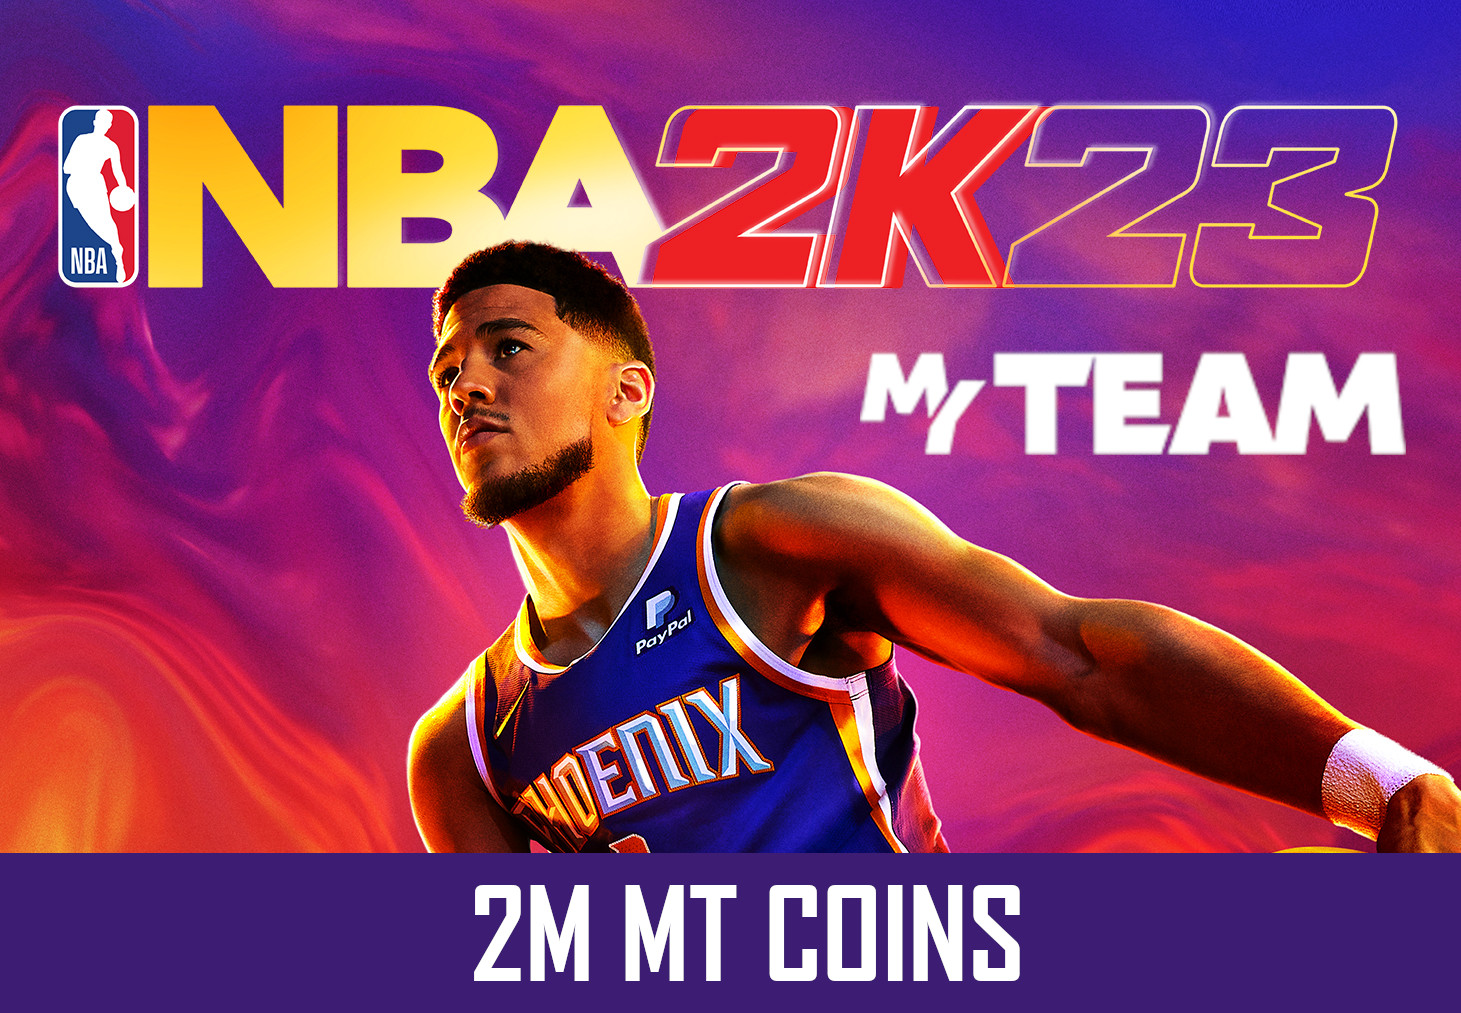 NBA 2K23 - 2M MT Coins - GLOBAL PC